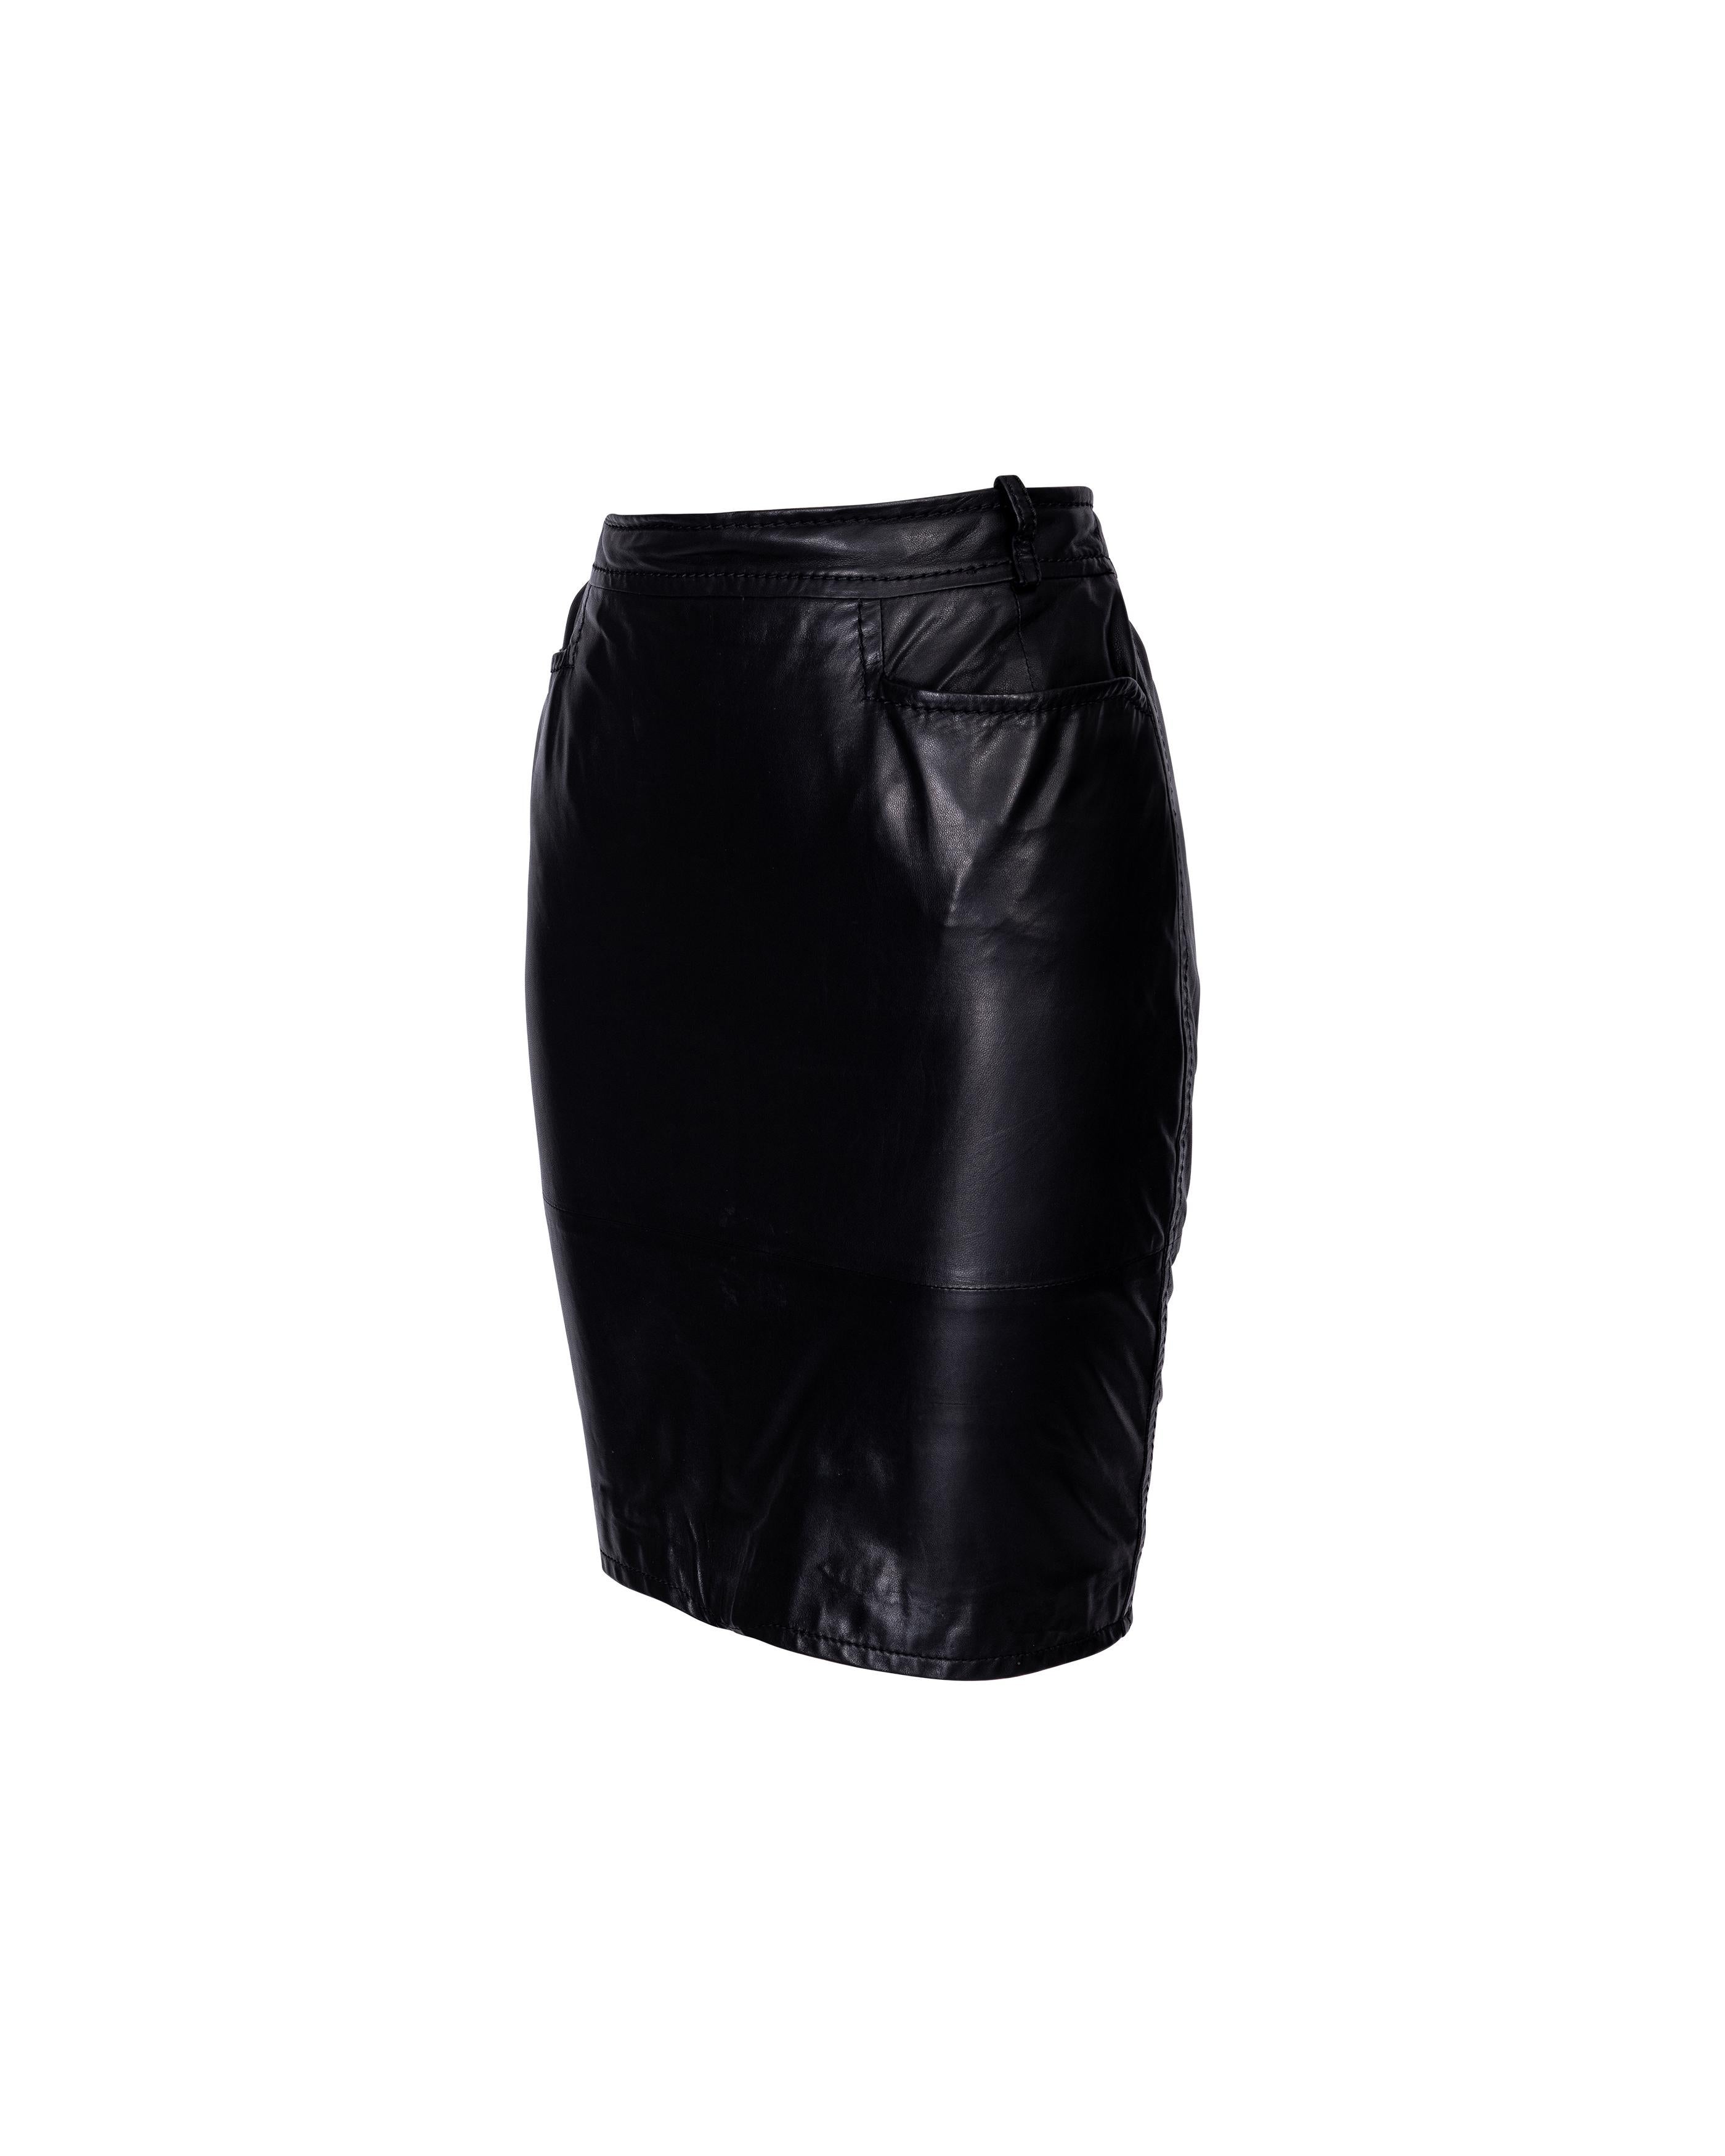 A/W 2005 Christian Dior by John Galliano Black Leather Skirt Set 3